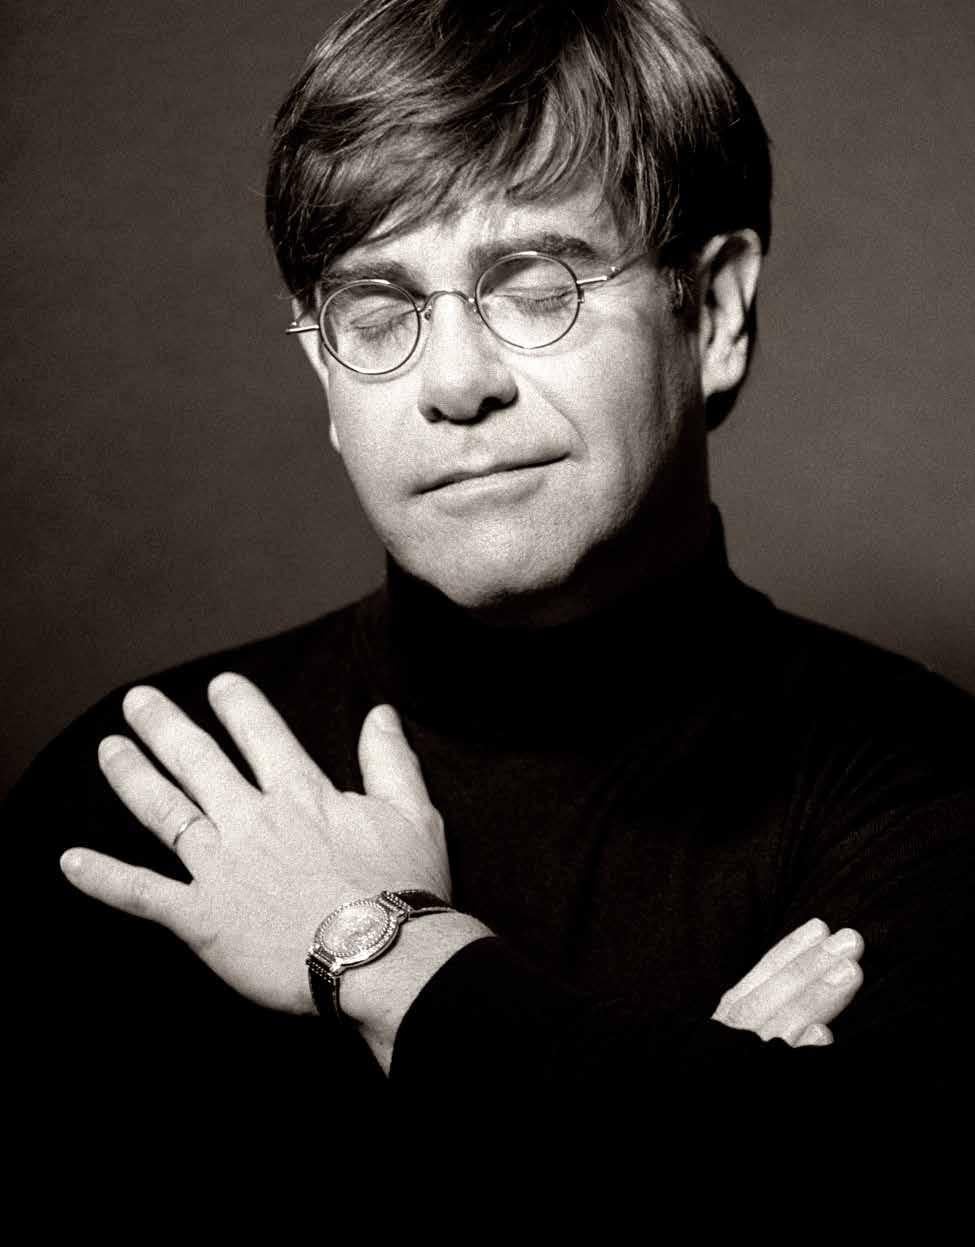 Greg Gorman Black and White Photograph - Elton John, Contemporary, Celebrity, Photography, Portrait